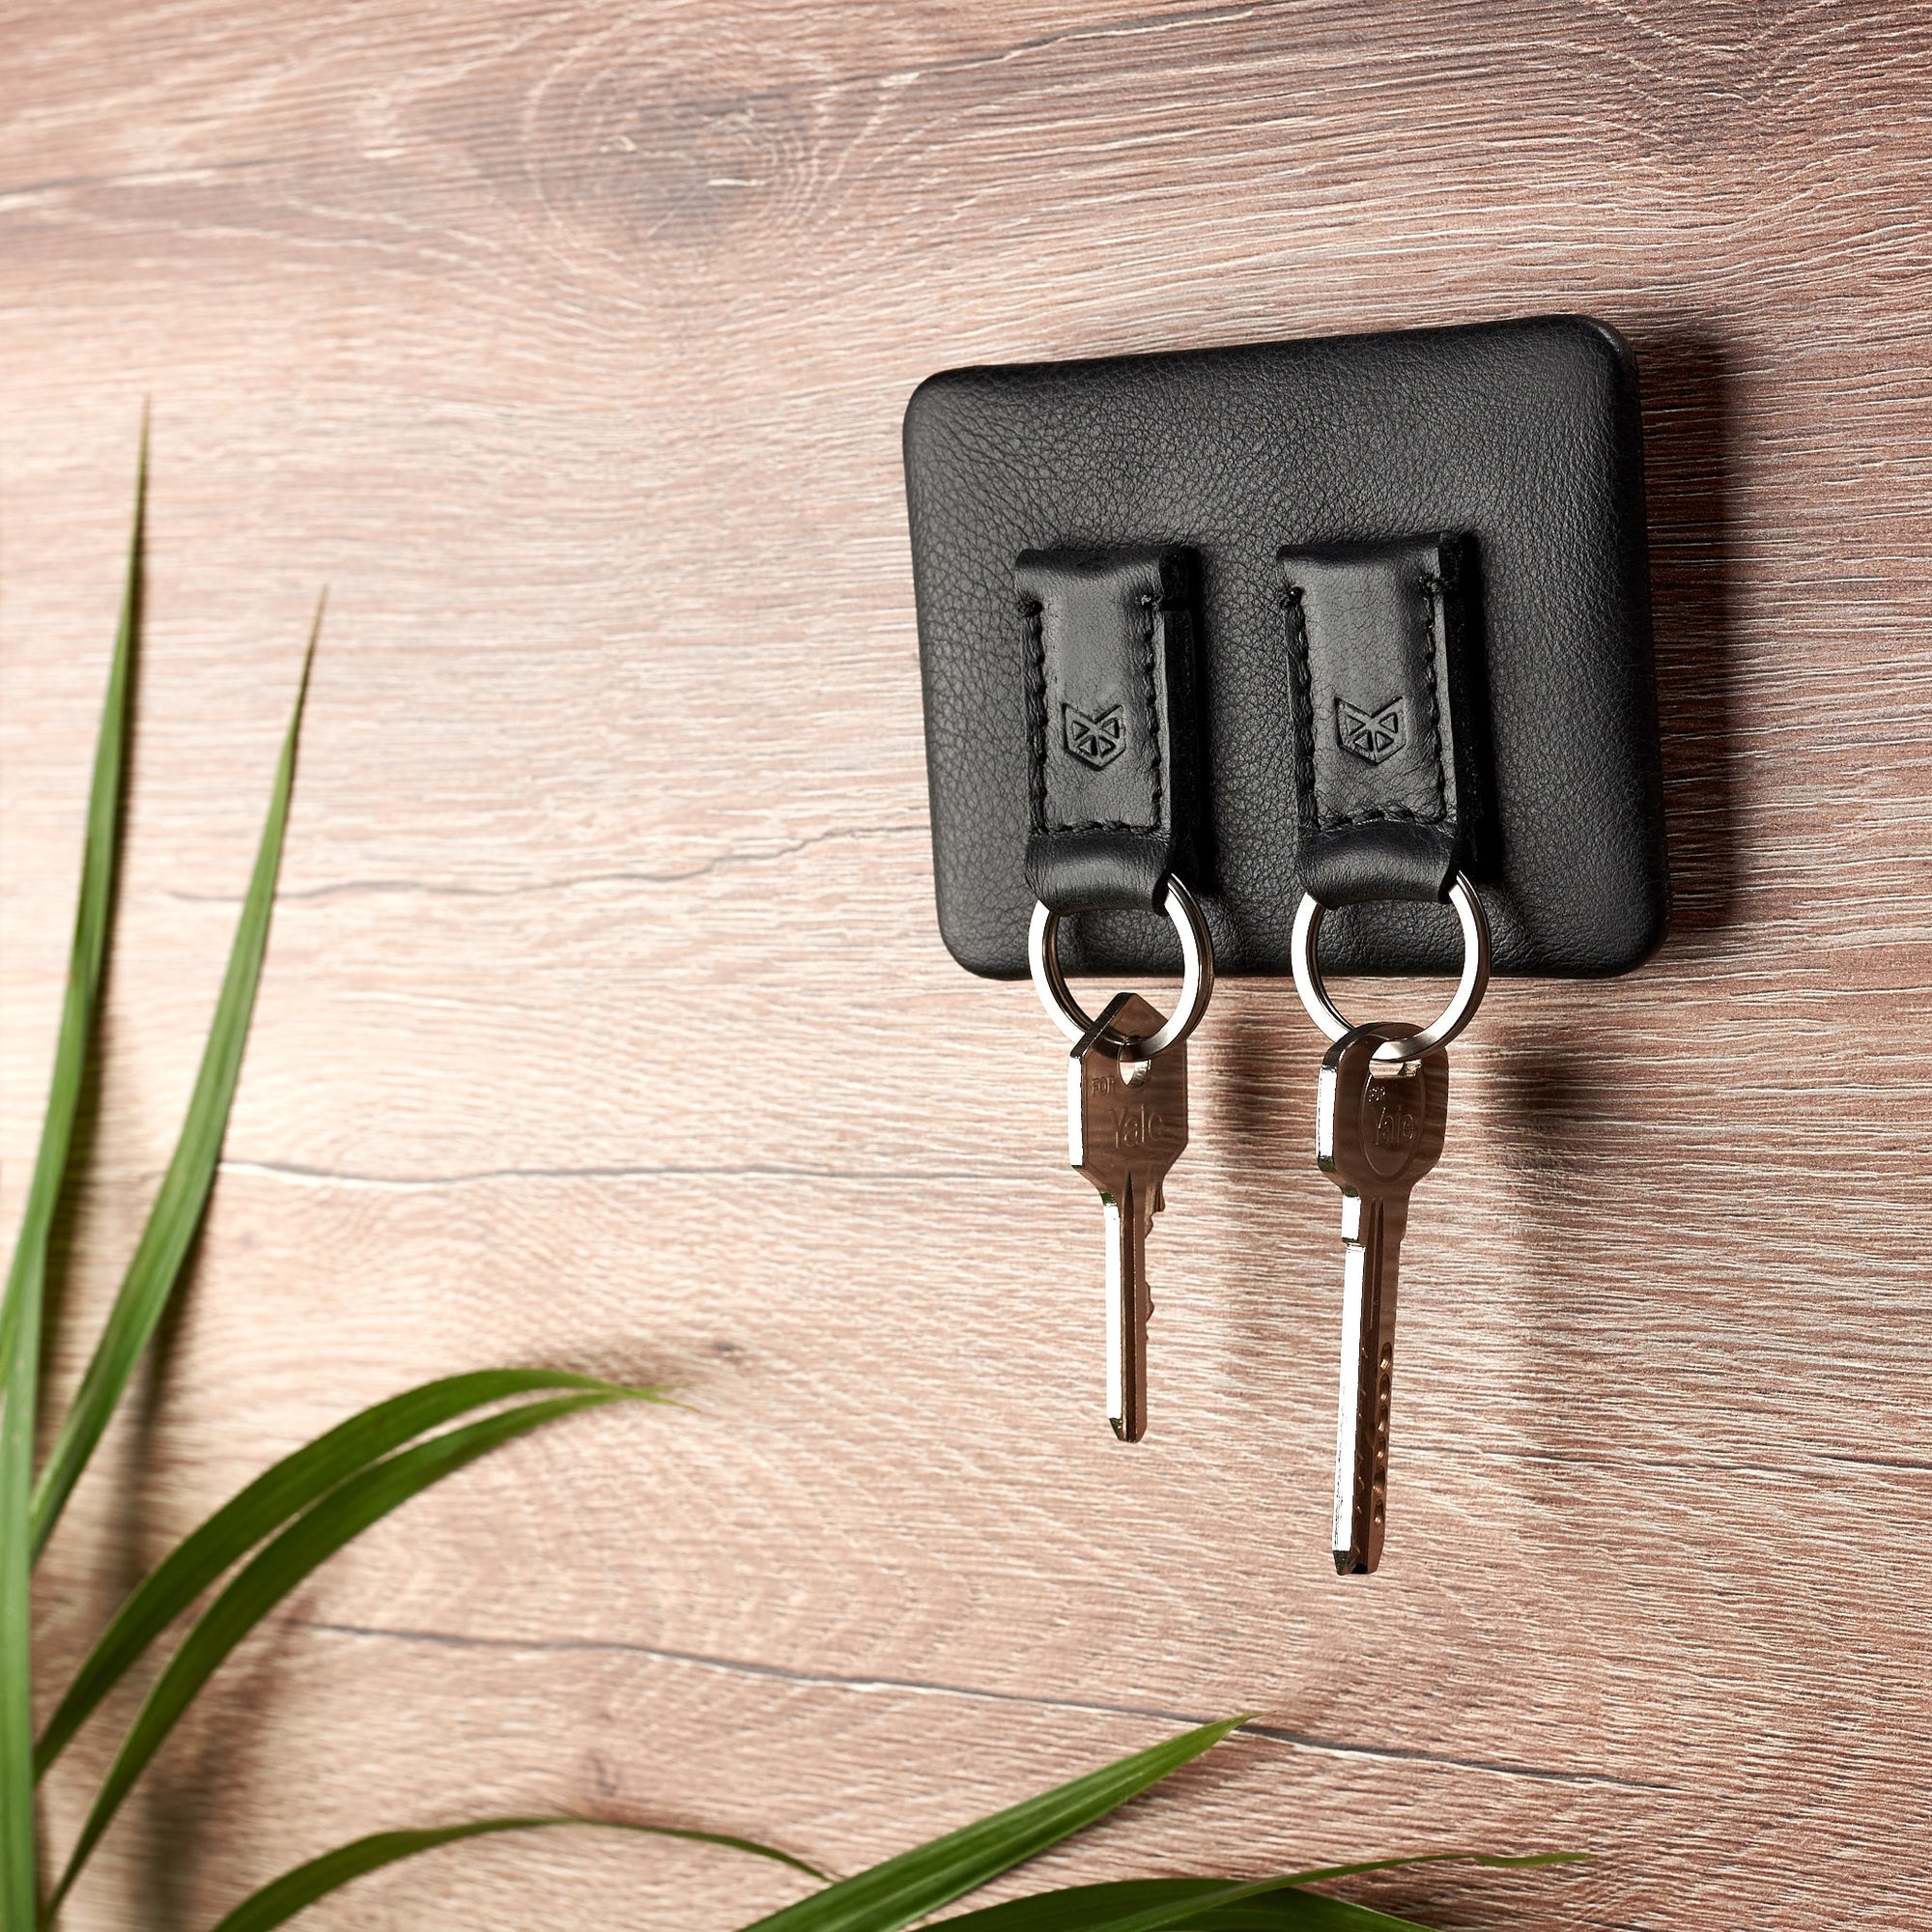 Magnetic key hanger organizer. Black leather magnetic key holder for wall decor. Entryway organizer decor. Home decoration. Keys organizer